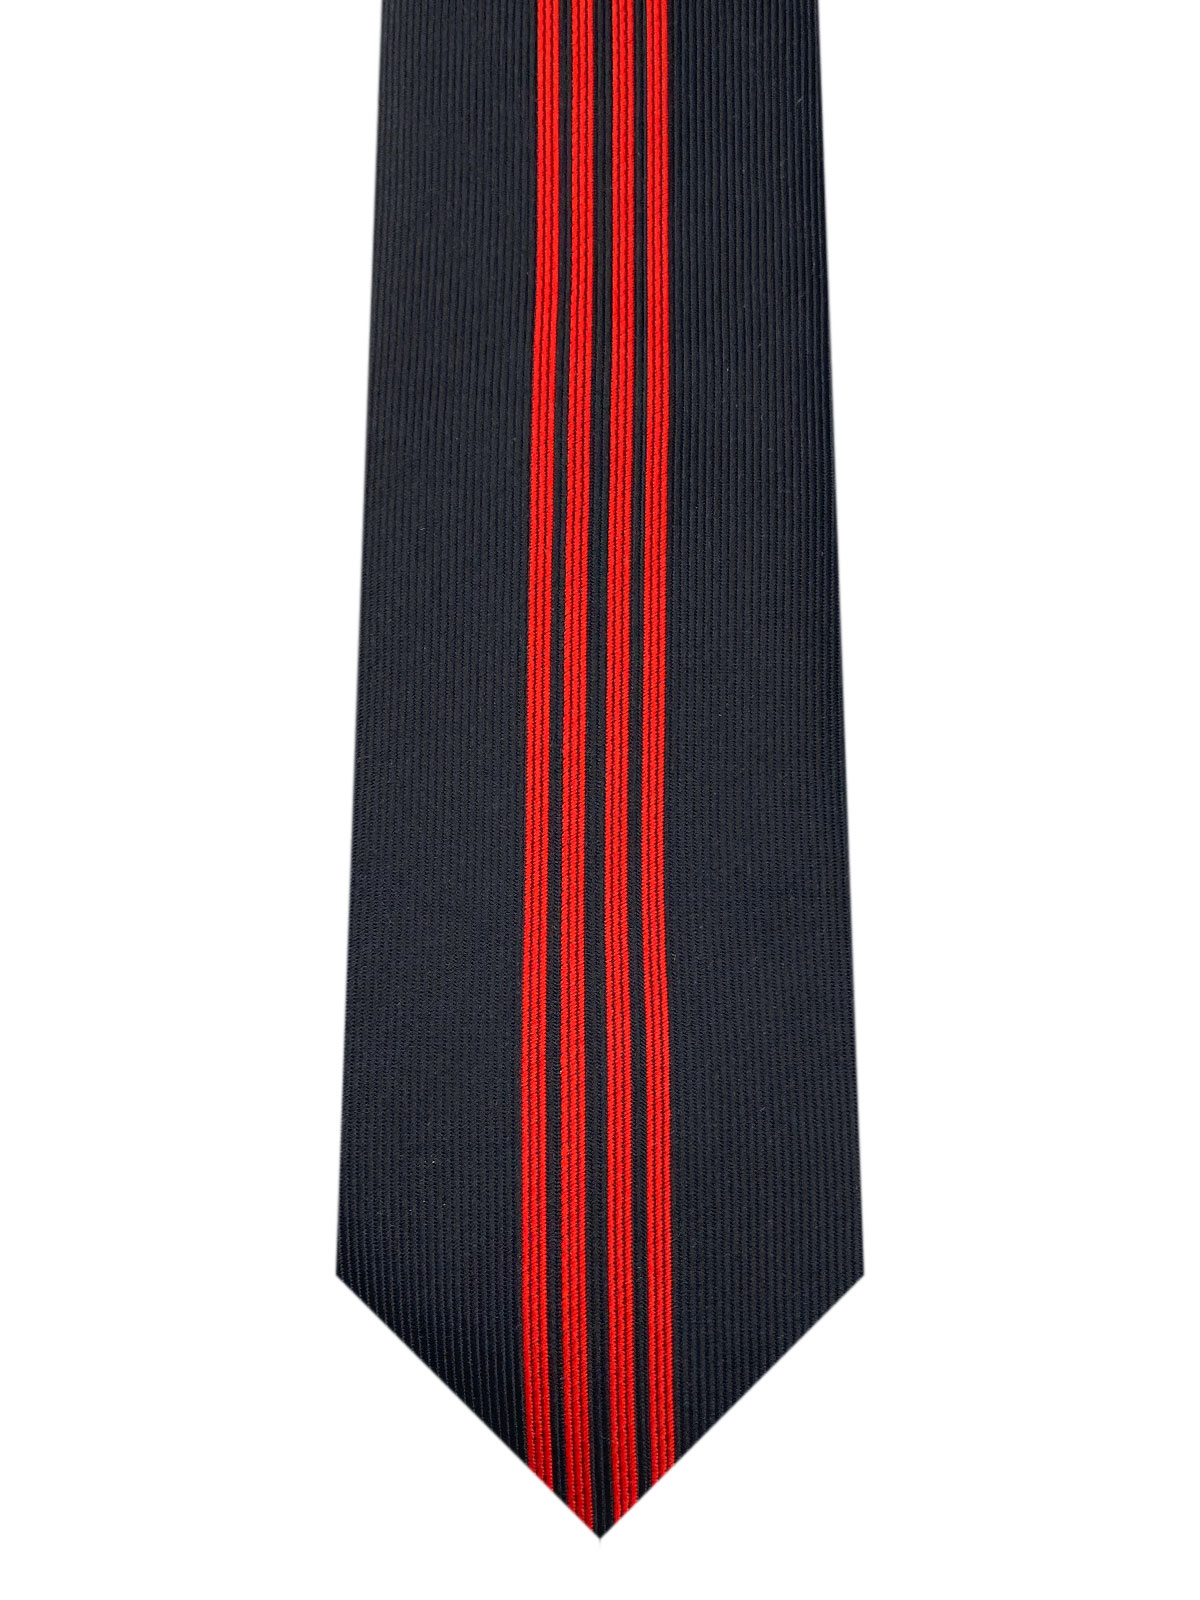 Cravată jacquard cu dungi roșii - 10205 - € 14.06 img2